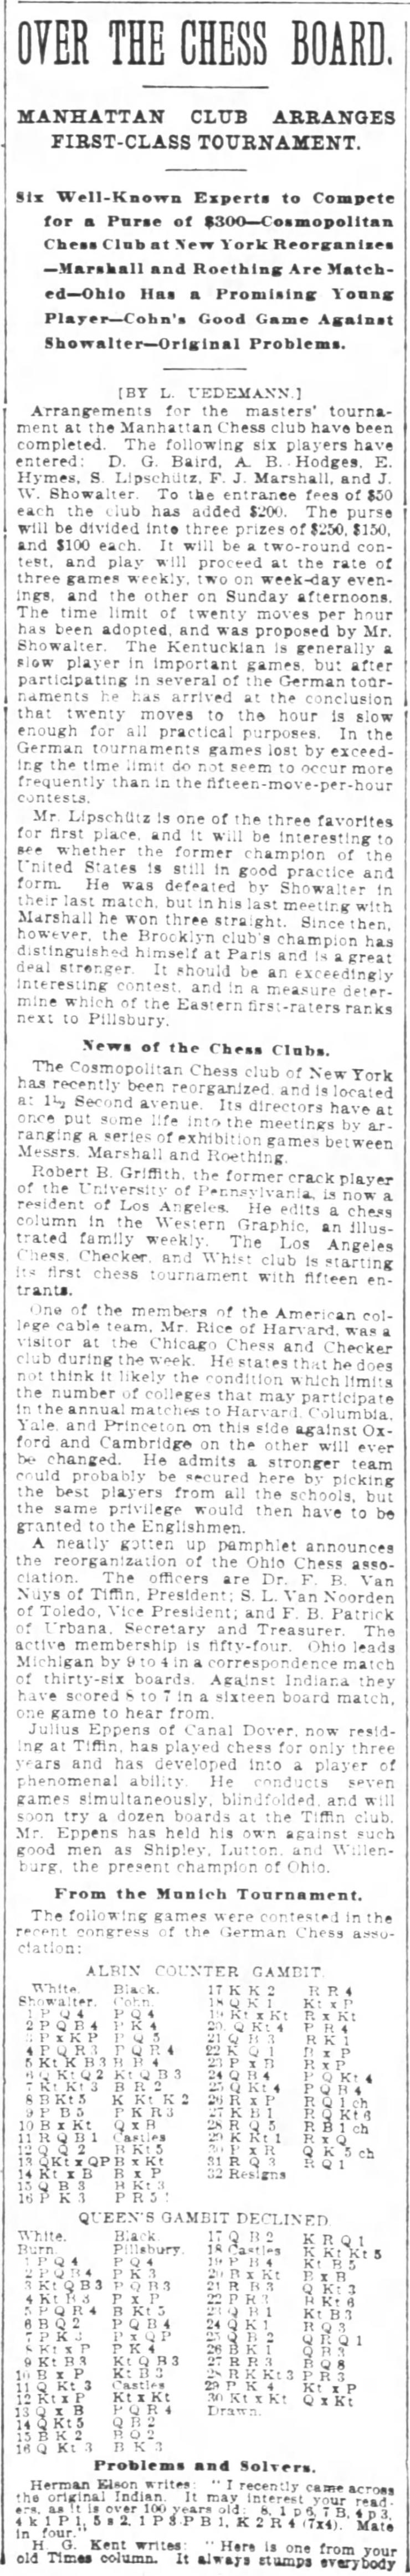 1900.10.07-01 Chicago Tribune.jpg